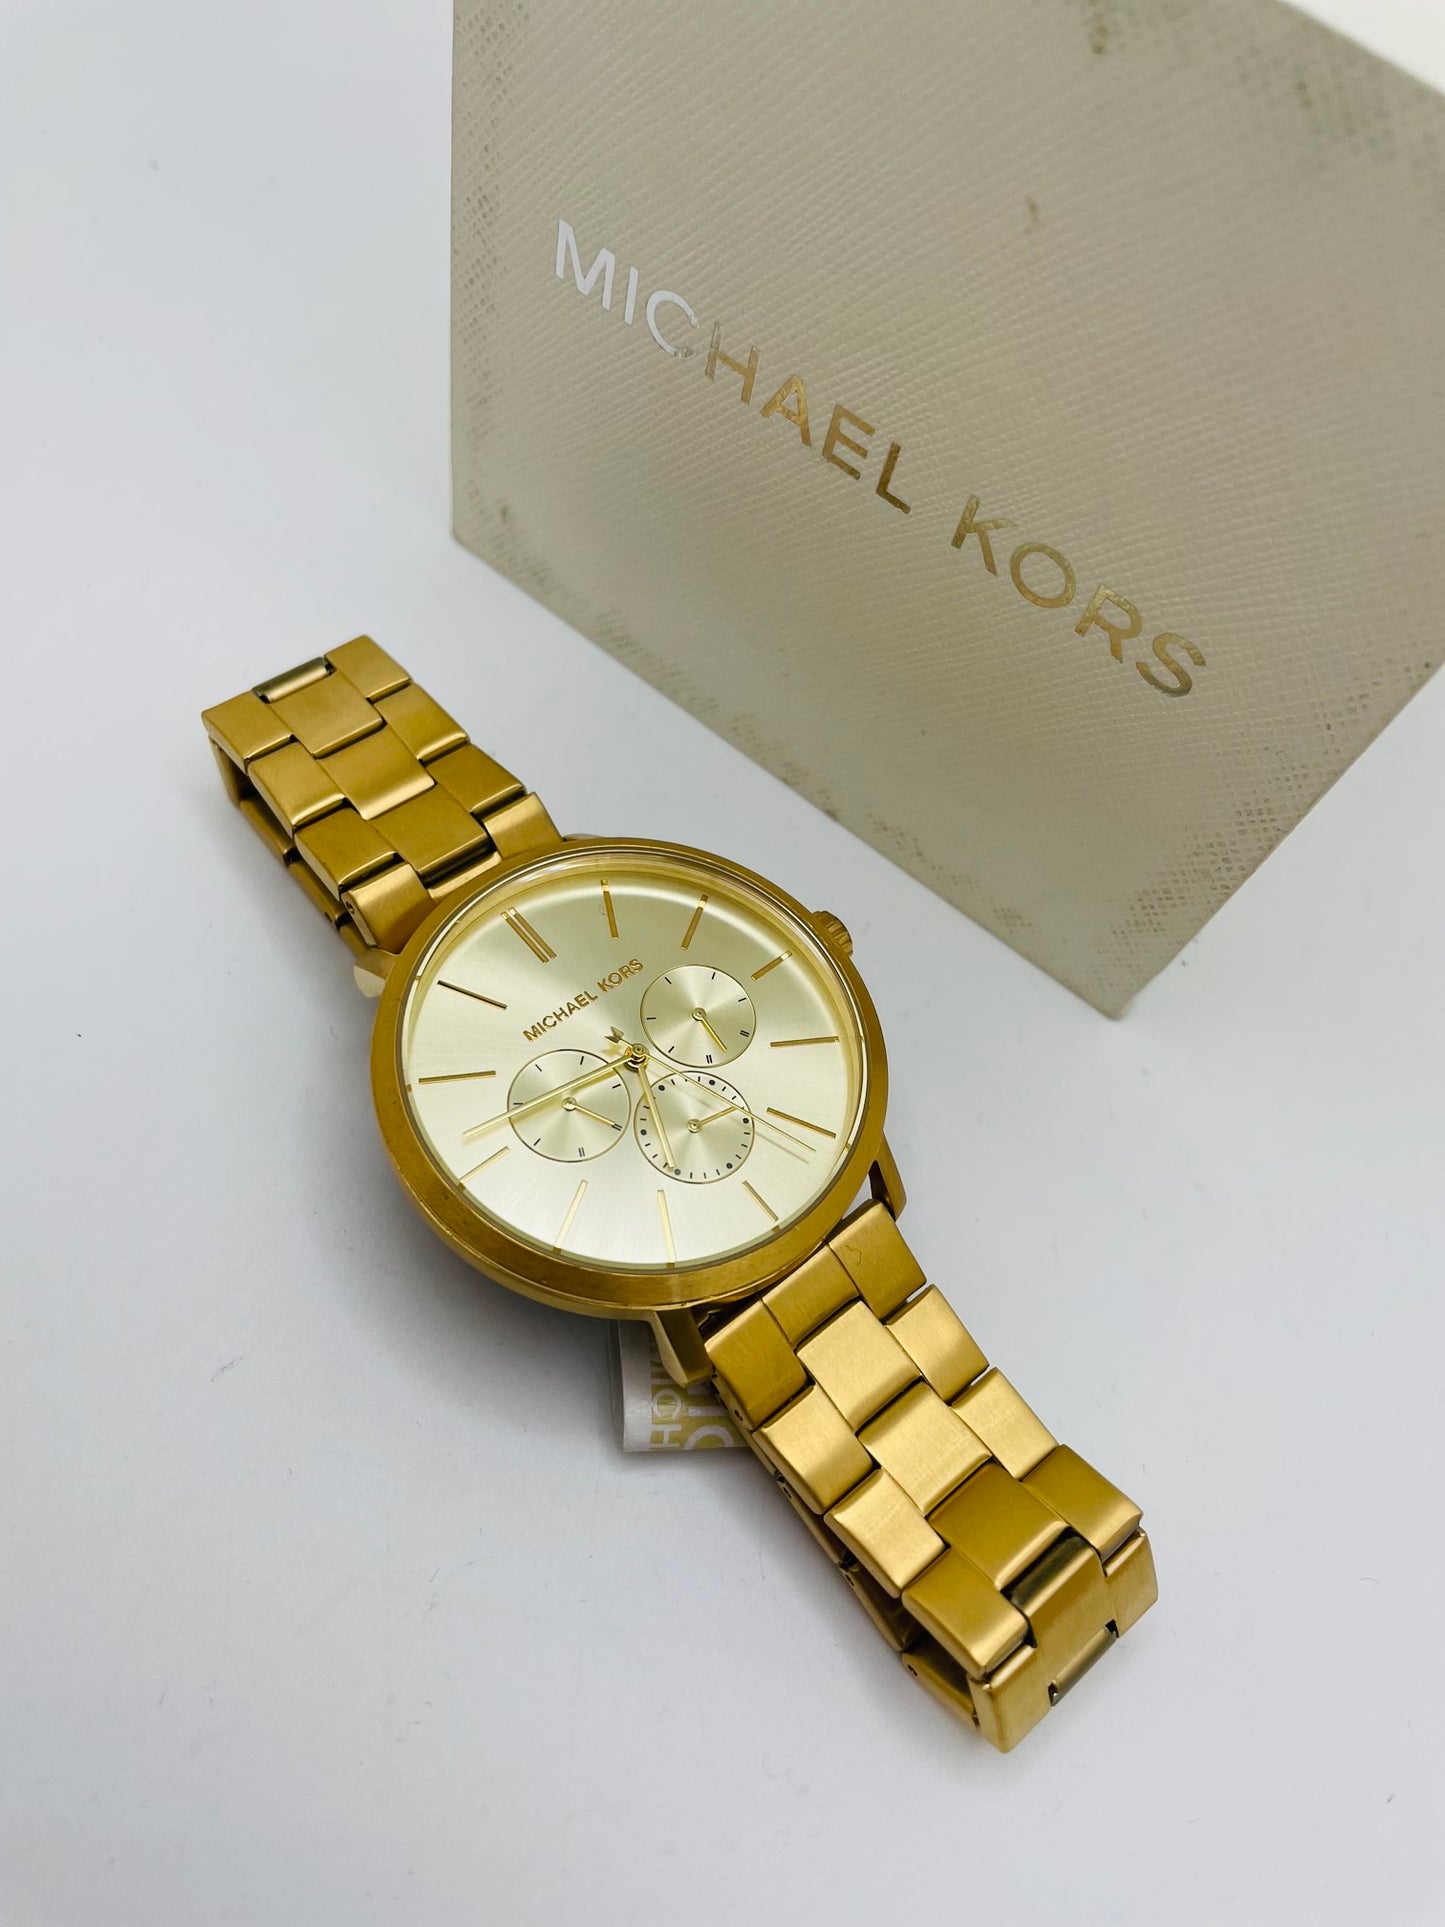 Michael kors watch